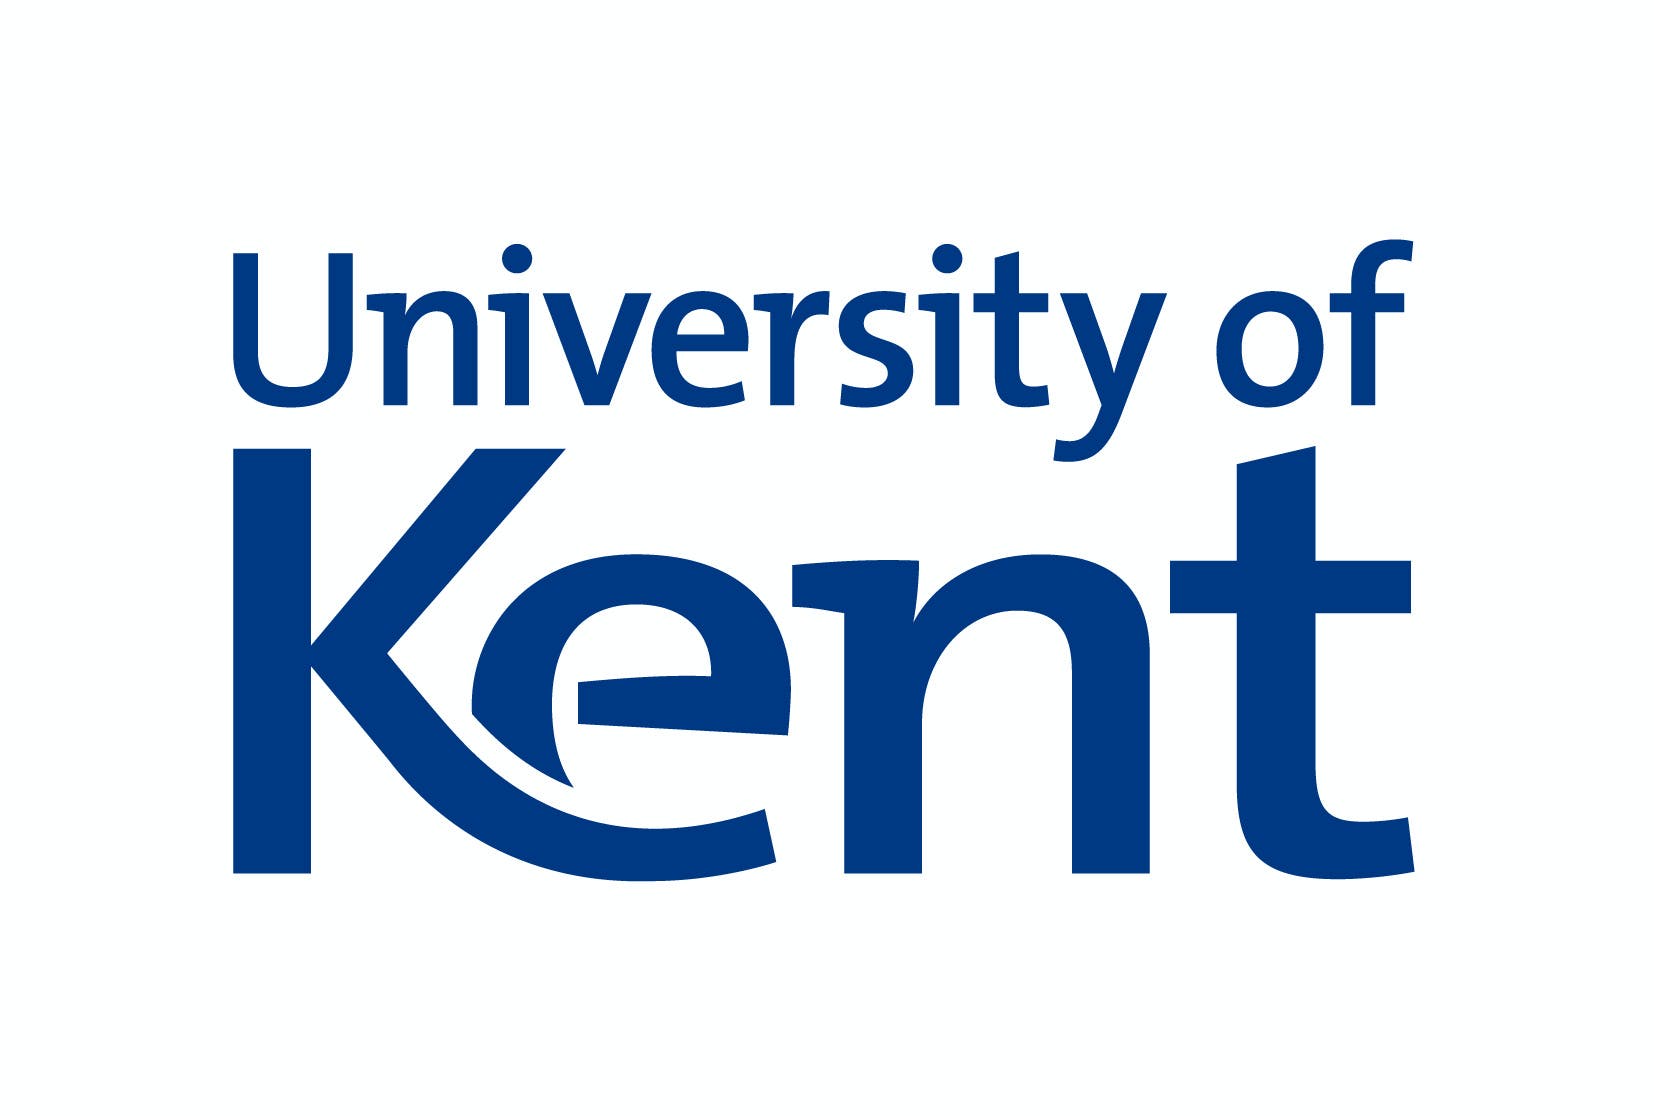 University of Kent (UK)